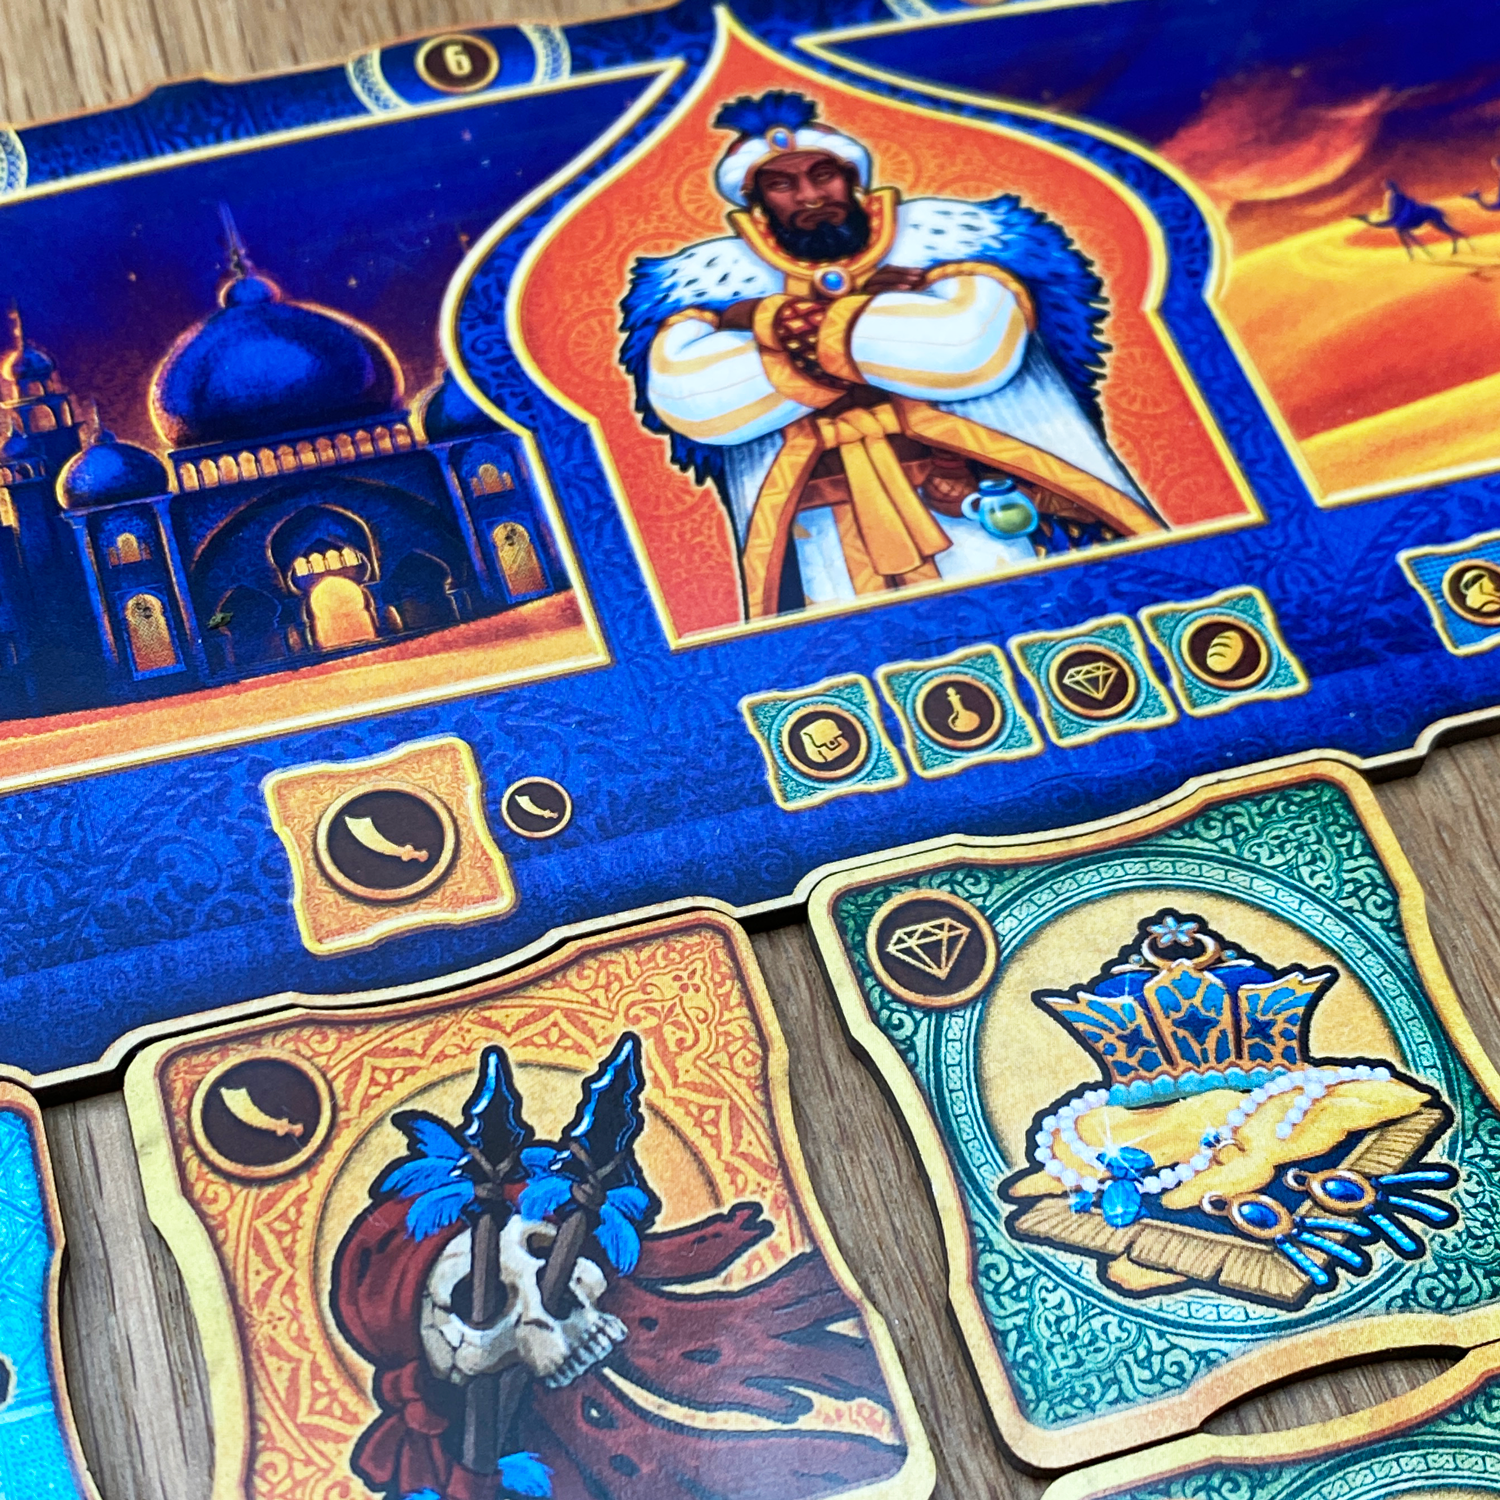 Character Caravan in Tiles of the Arabian NightsImage © Board Game Review UK